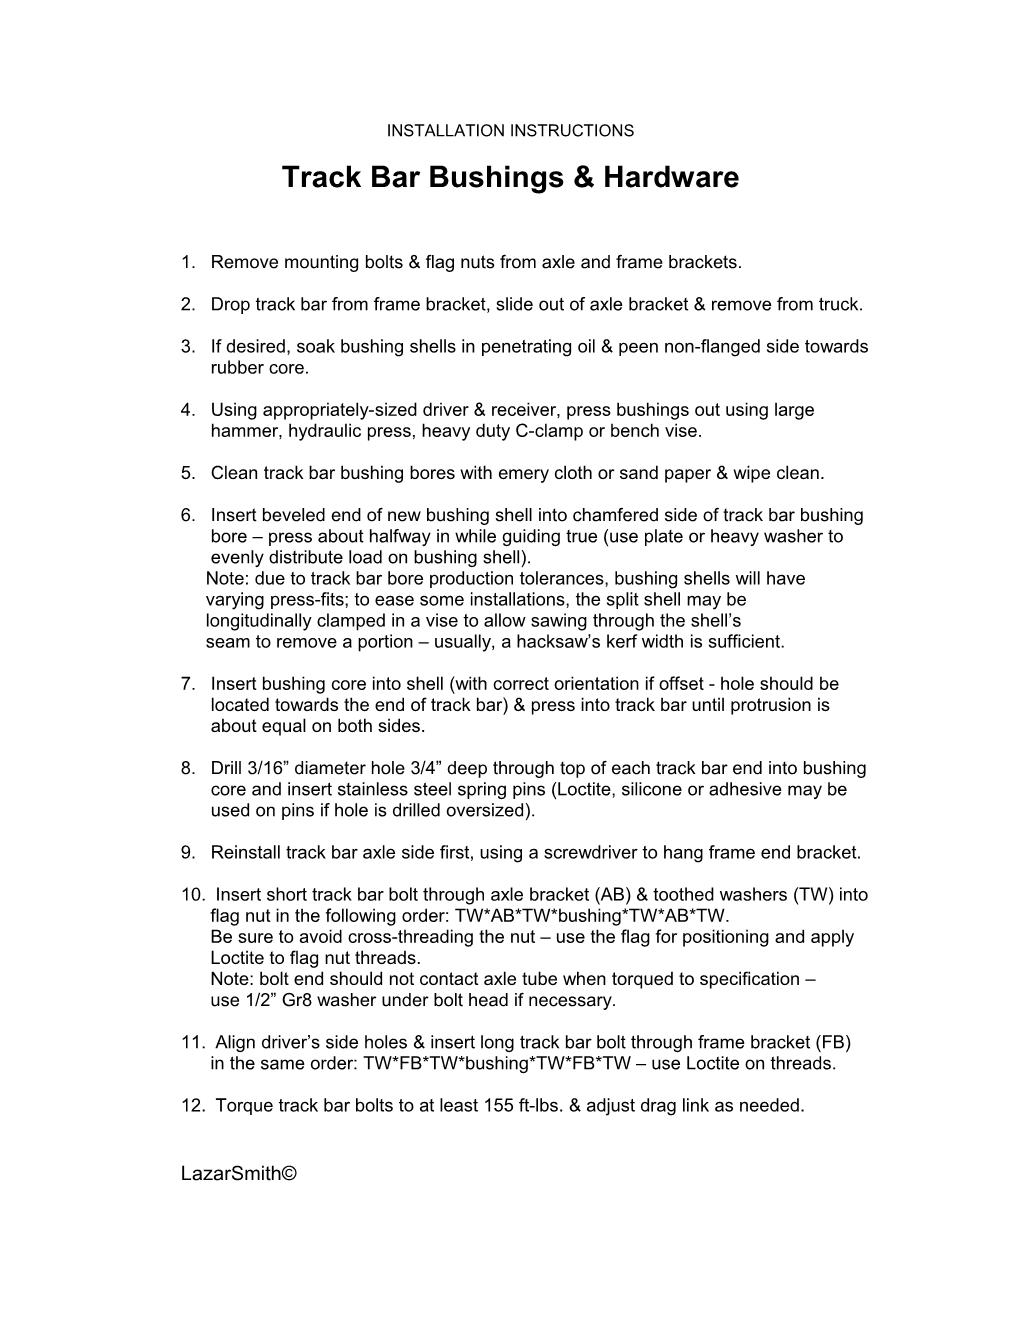 Track Bar Bushings & Hardware